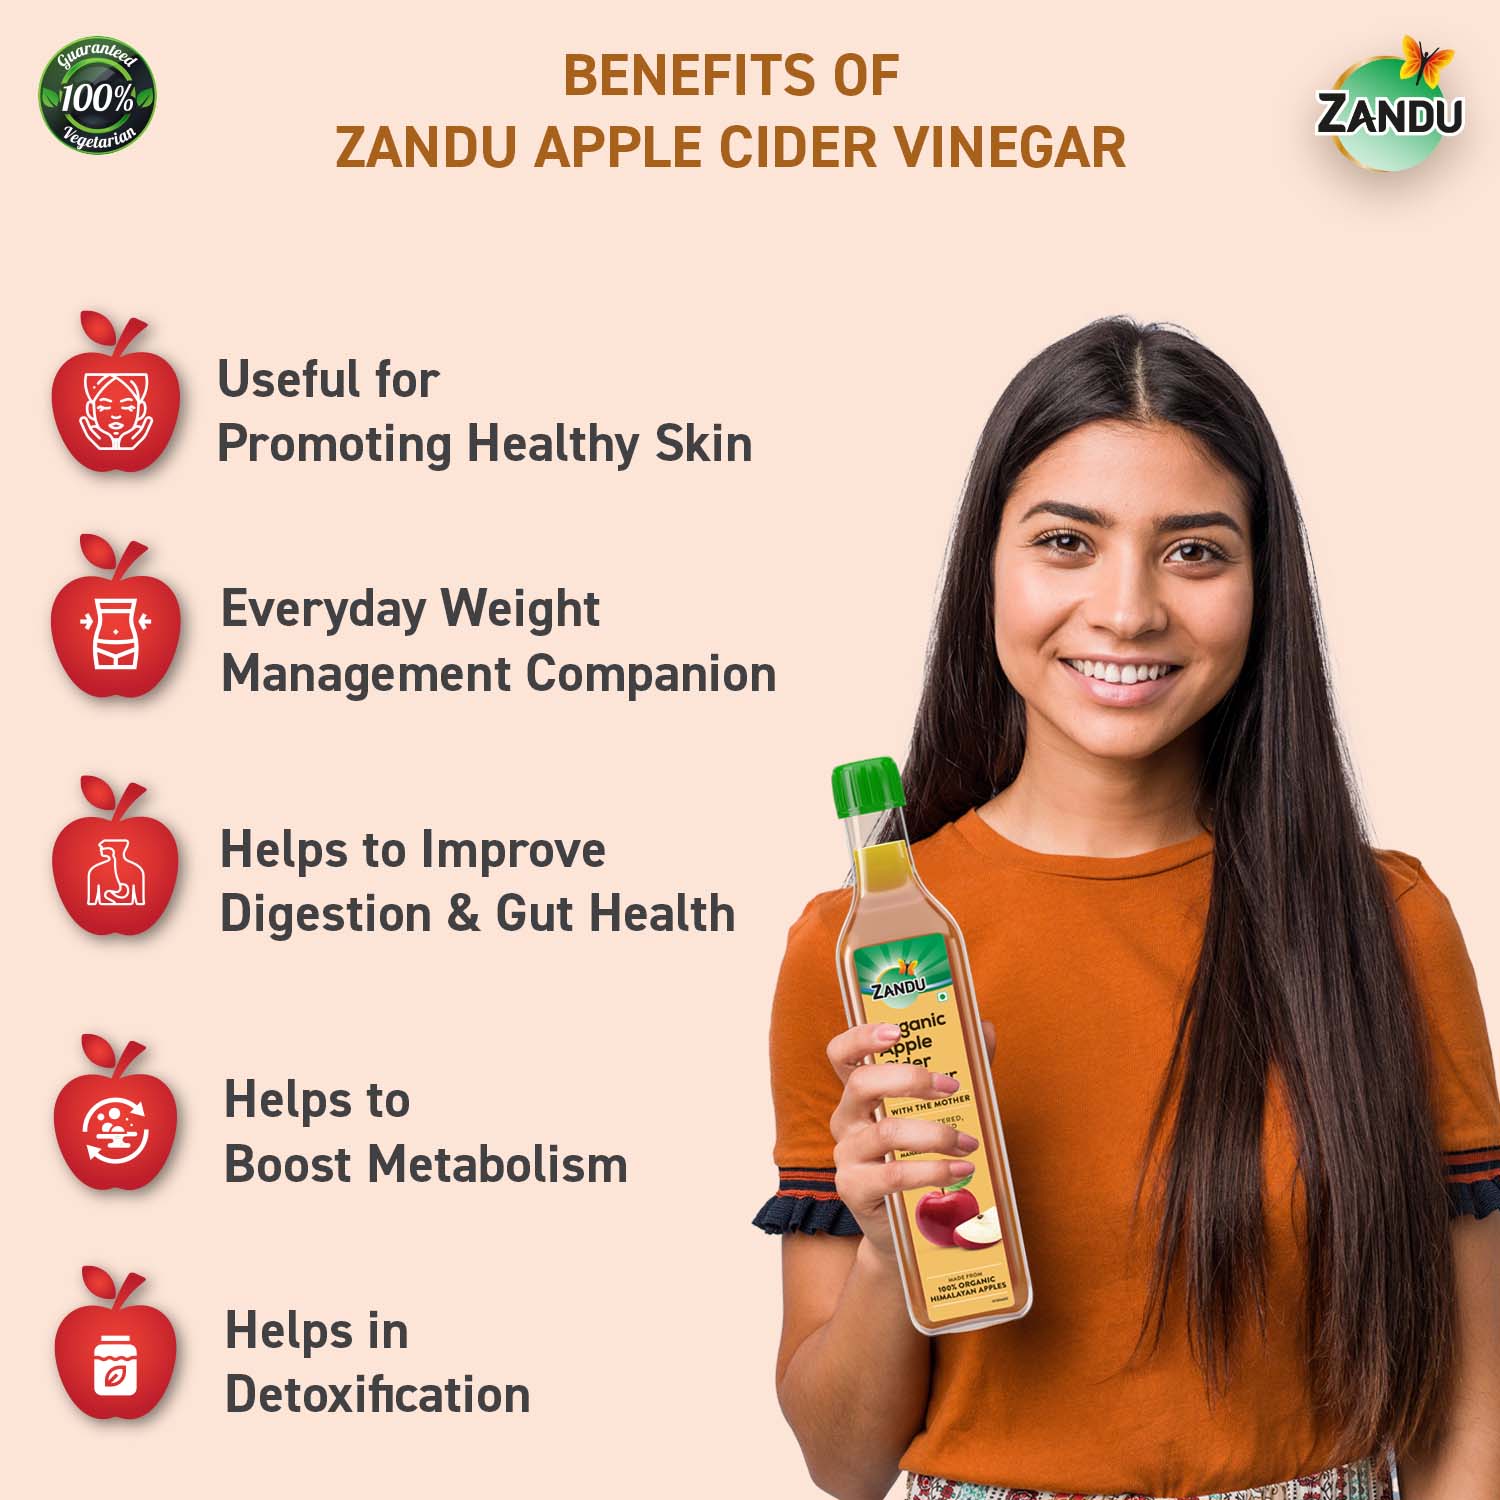 Zandu Organic Apple Cider Vinegar benefits